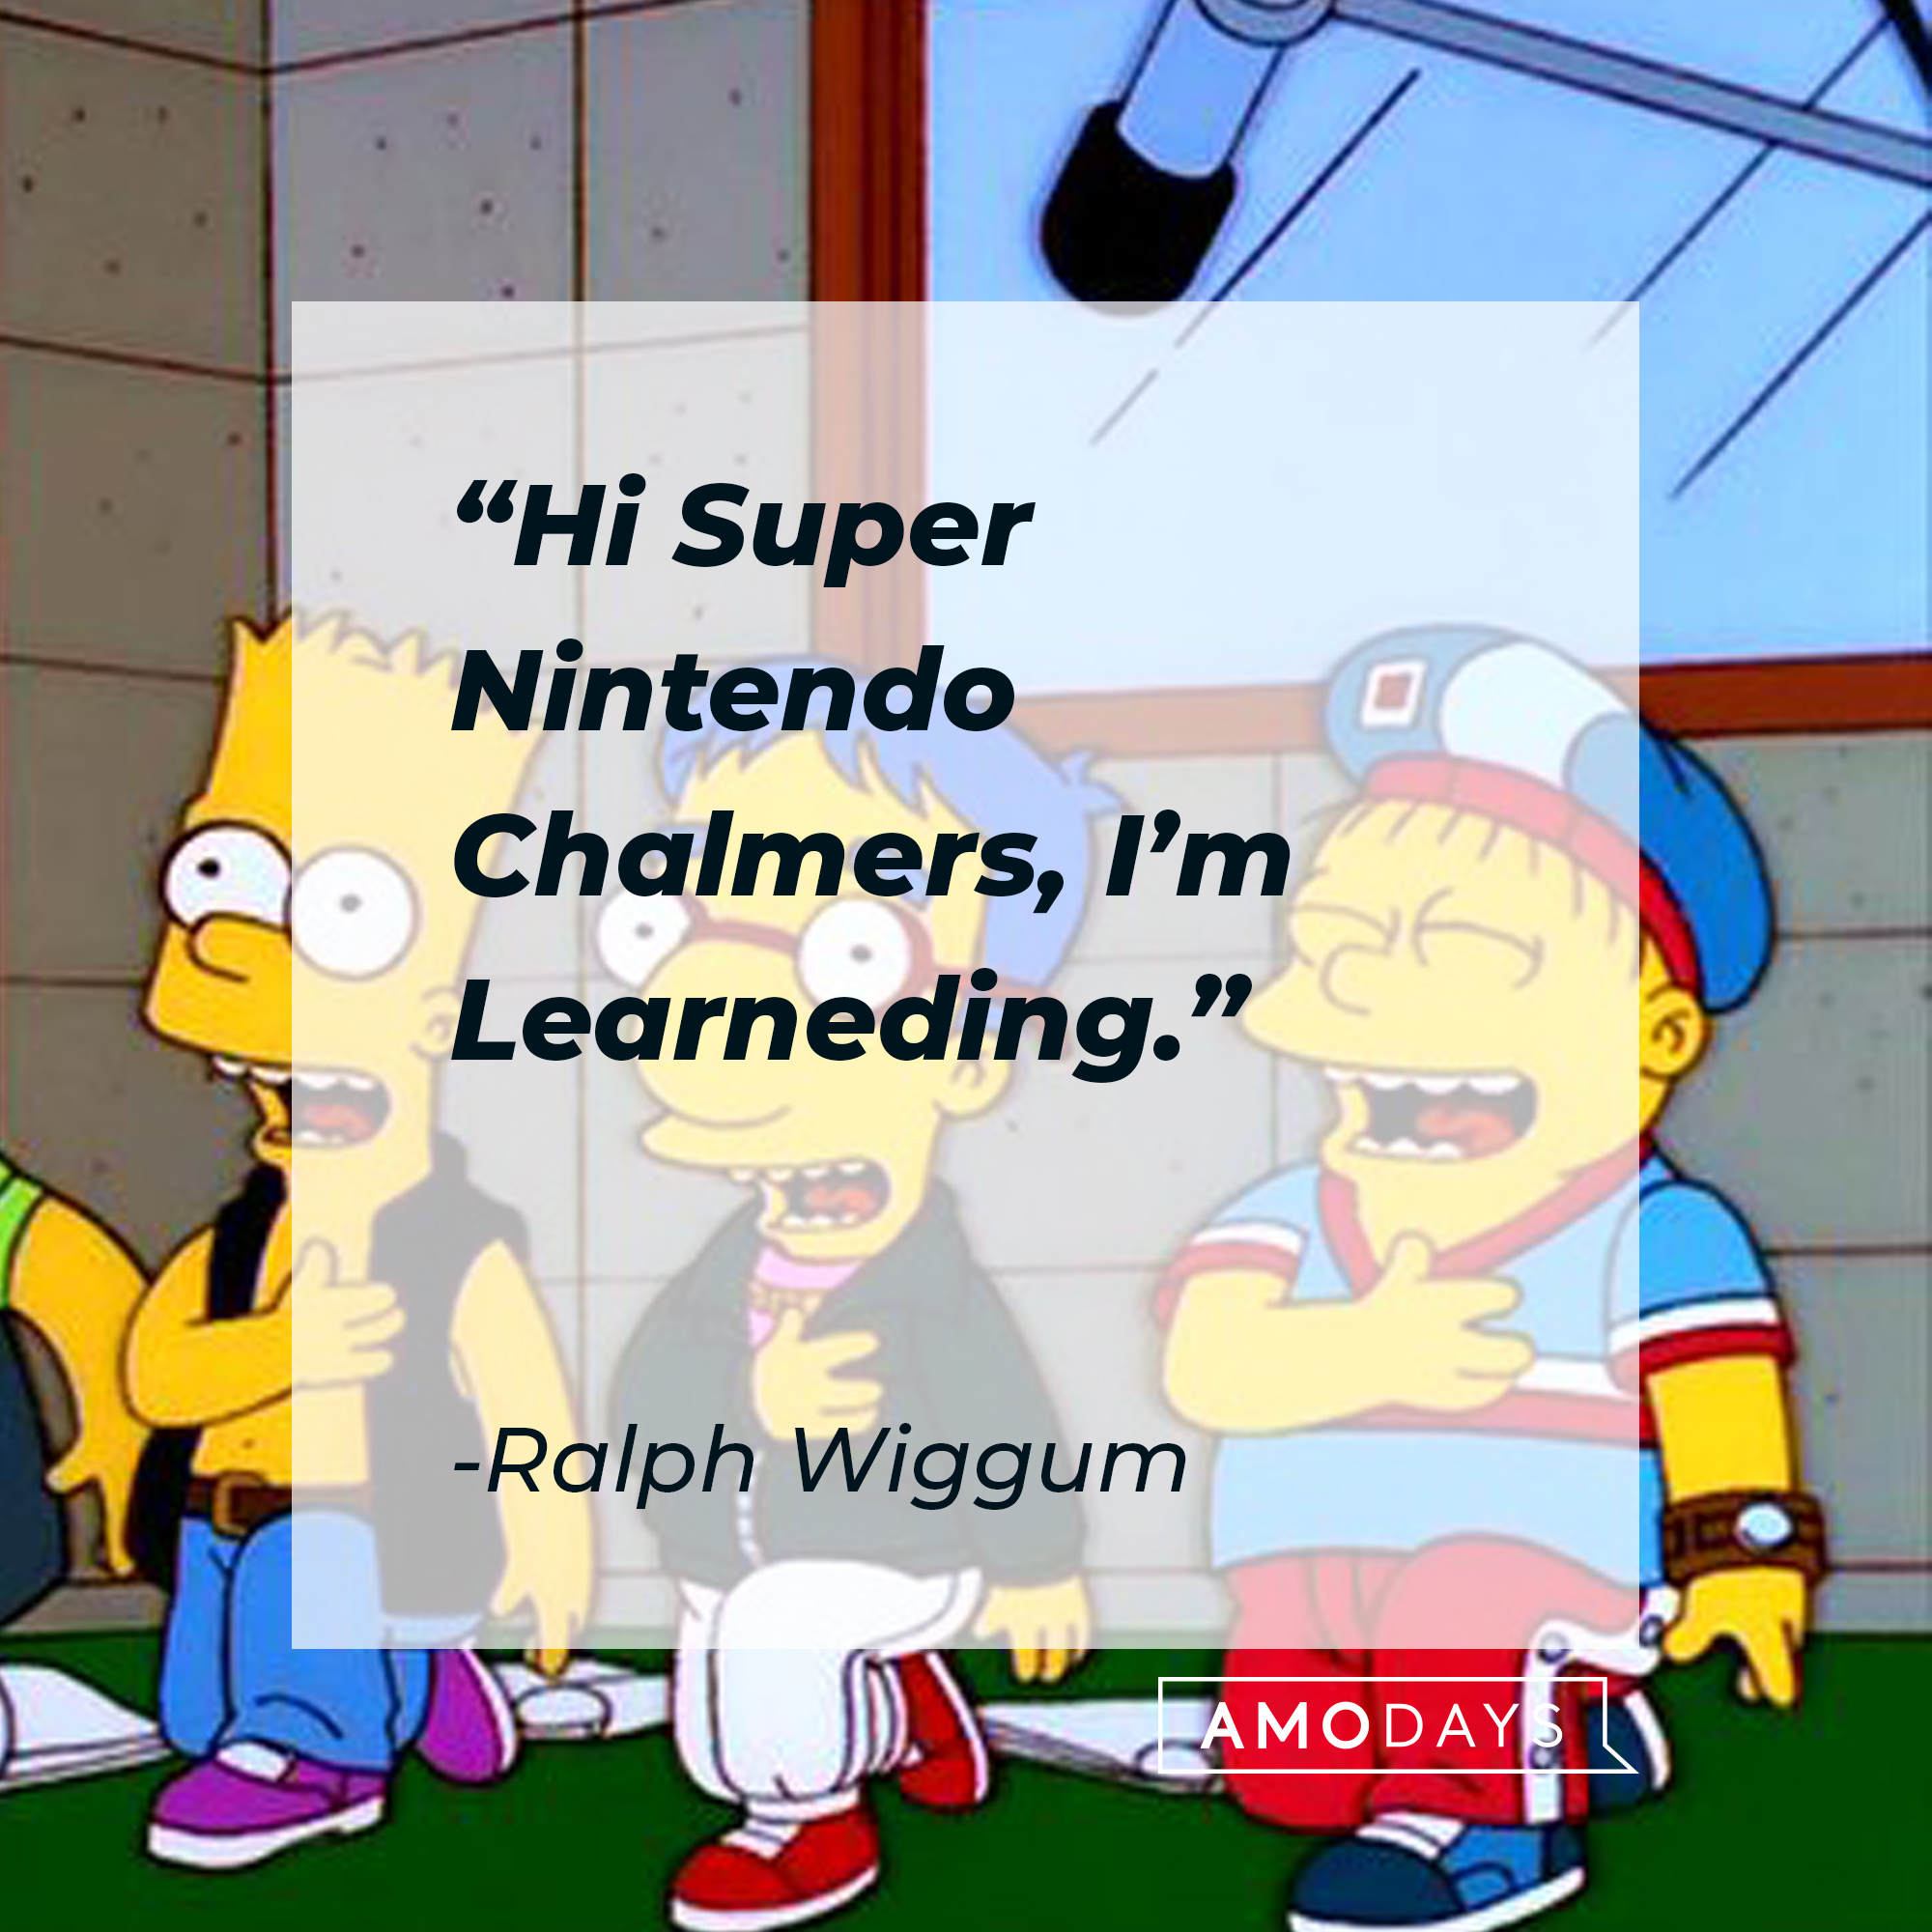 Ralph Wiggum's quote: "Hi Super Nintendo Chalmers, I'm Learneding." | Source: facebook.com/TheSimpsons